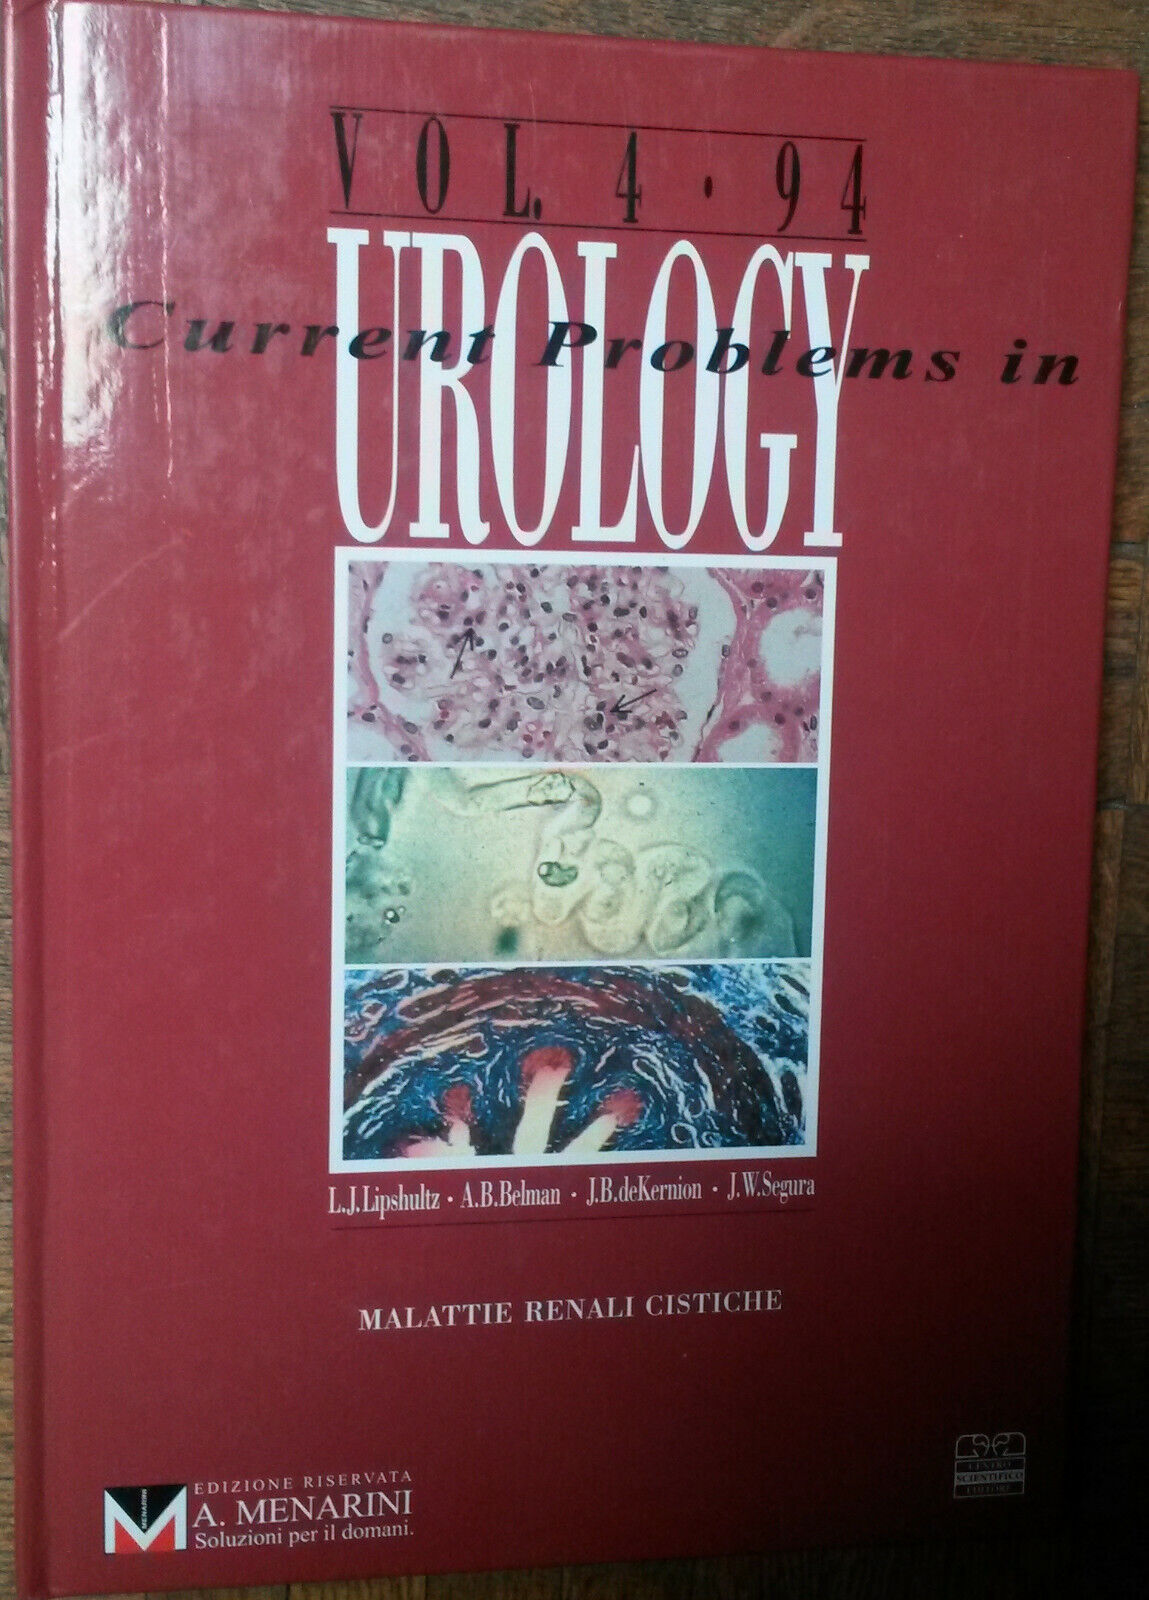 Current problems in Urology Vol. 4 94- AA.VV.- Centro Scientifico Editore,1995-R